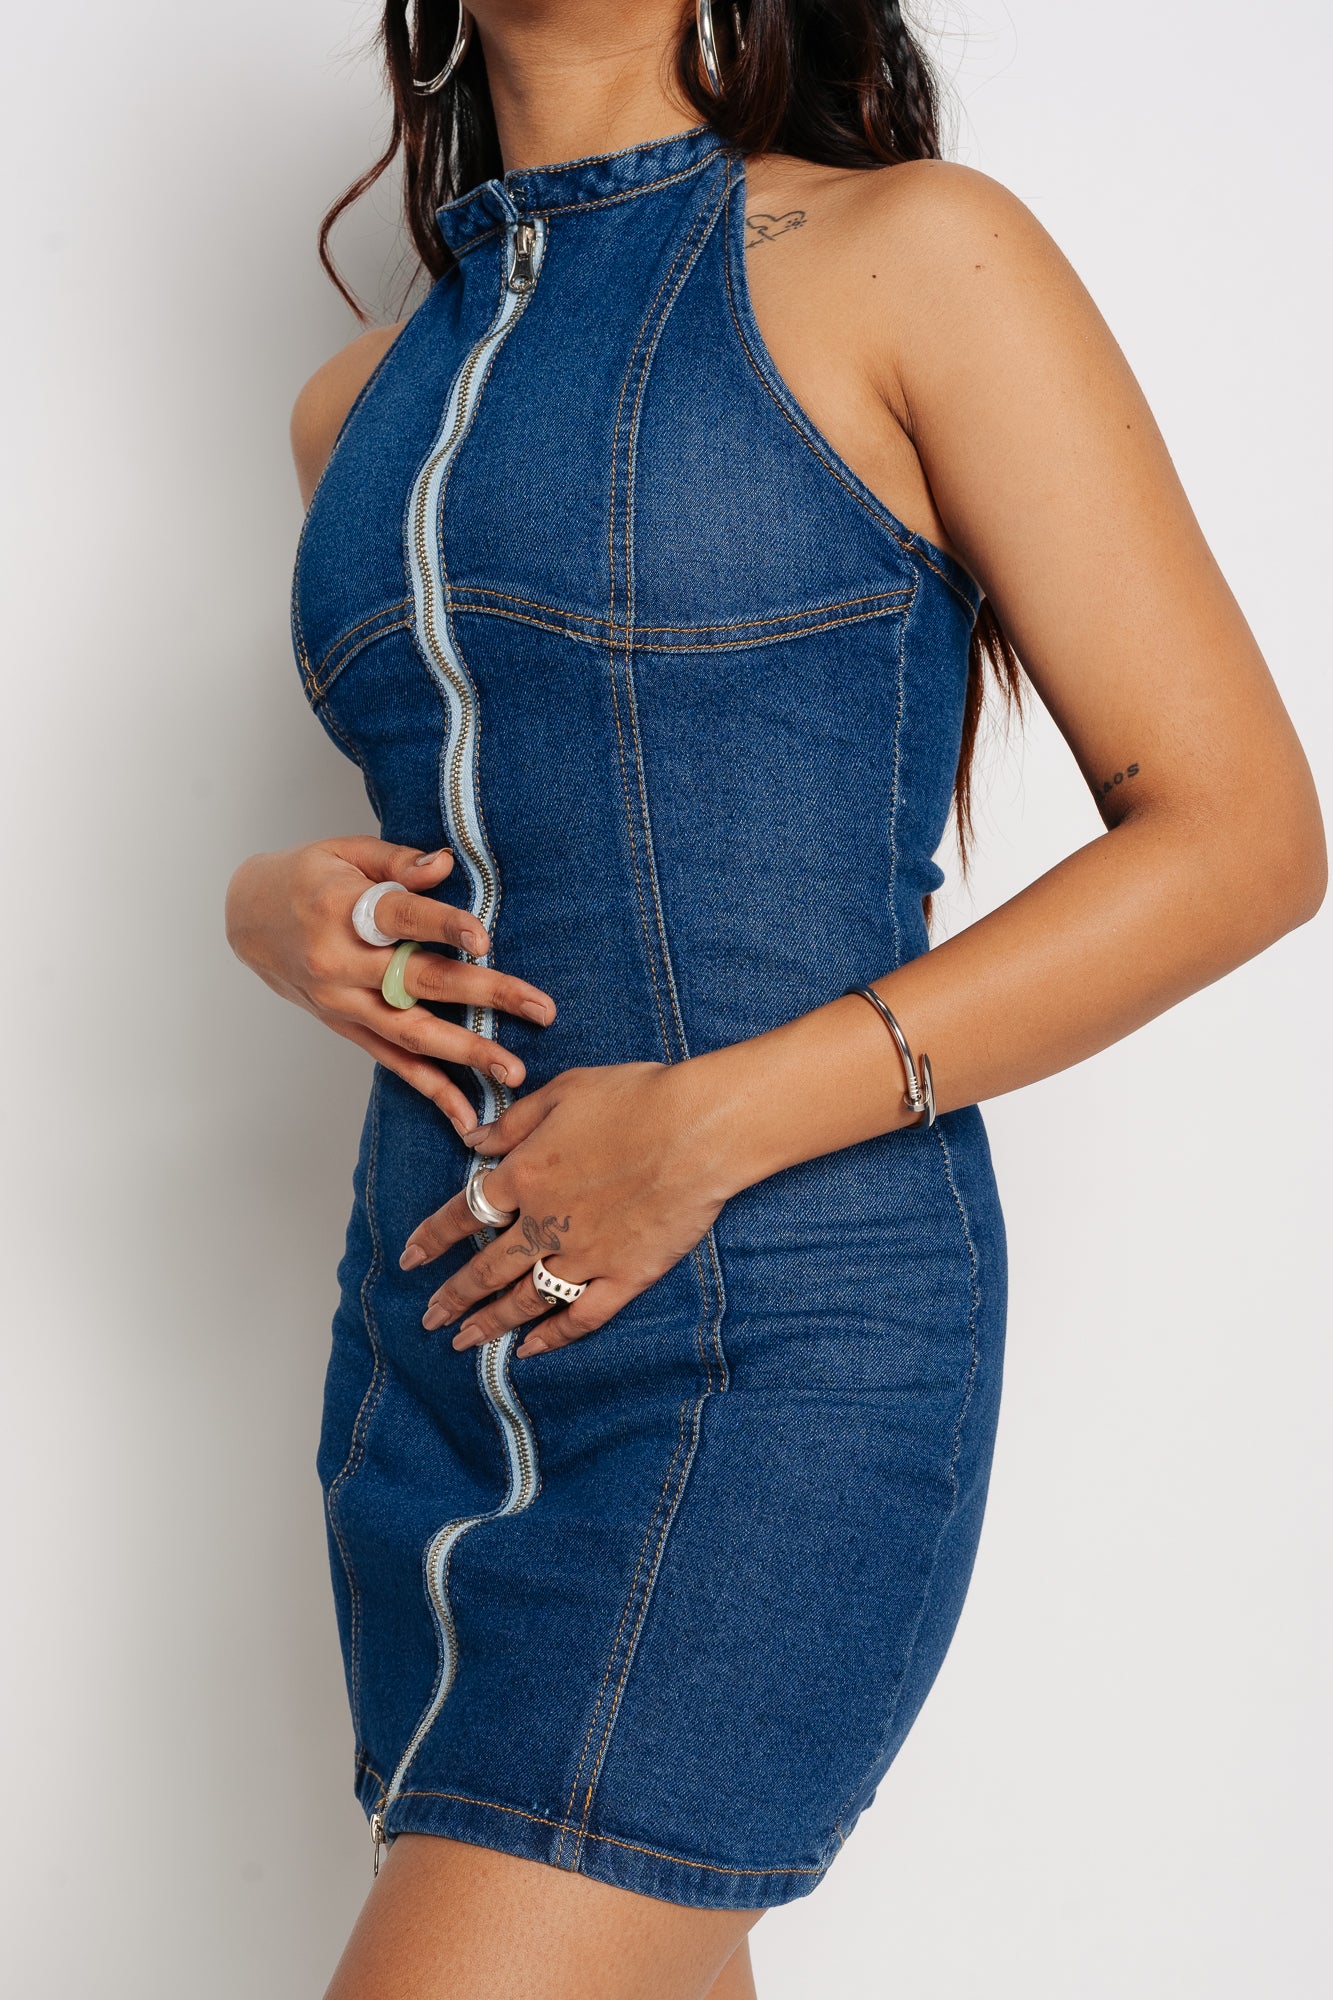 Melaina Mini Dress - Collared Zip Front Belted Denim Dress in Mid Blue Wash  | Showpo USA